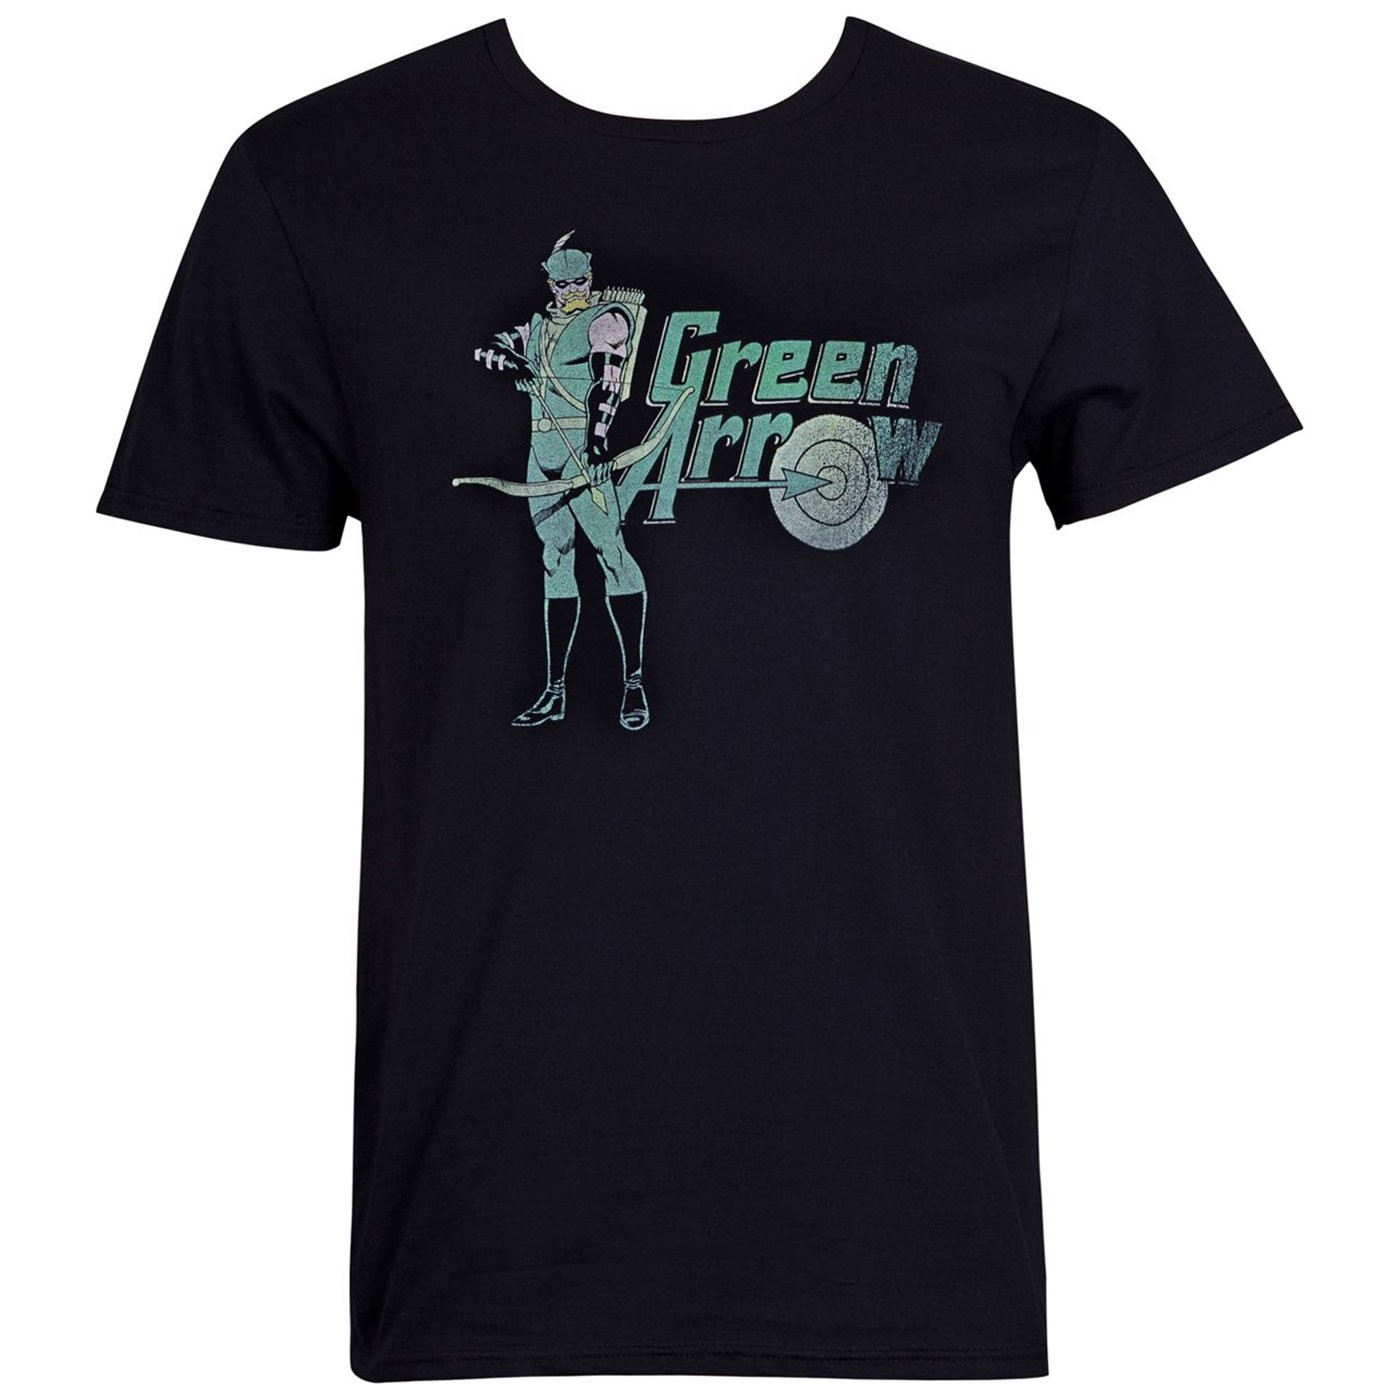 Green Arrow Character Men's T-Shirt